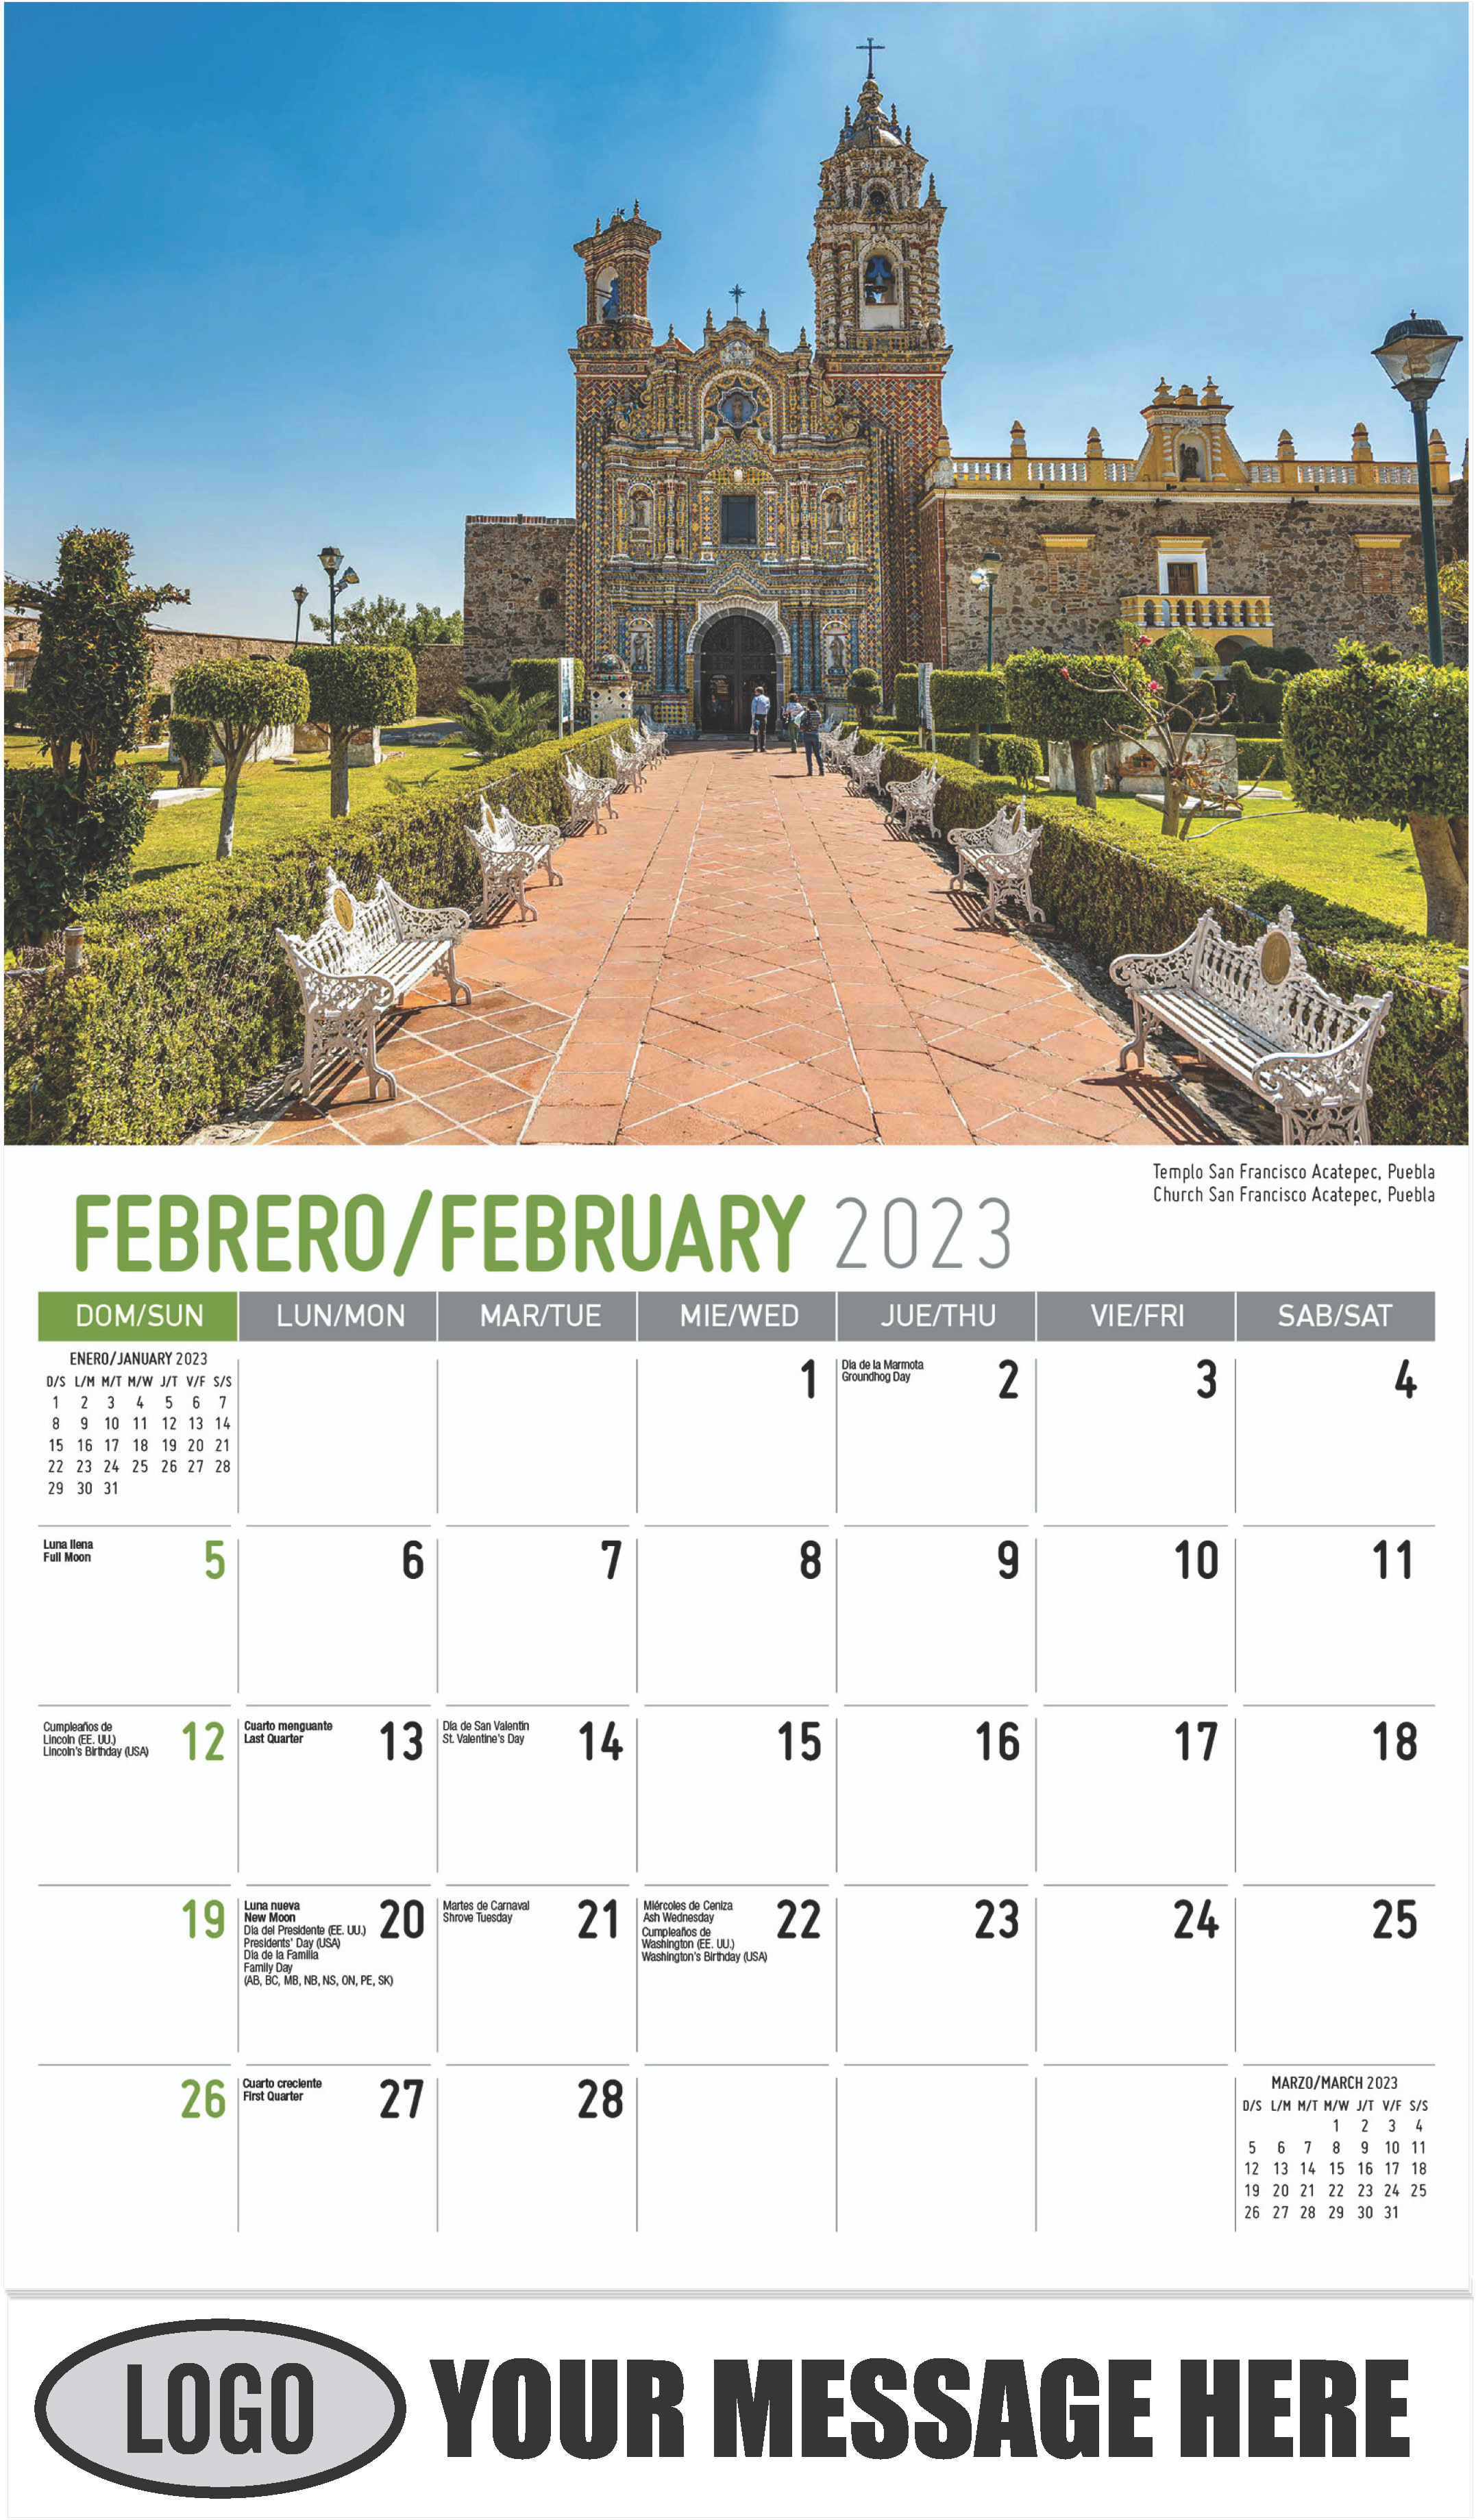 Church San Francisco Acatepec, Puebla - February - Scenes of Mexico (Spanish-English bilingual) 2023 Promotional Calendar